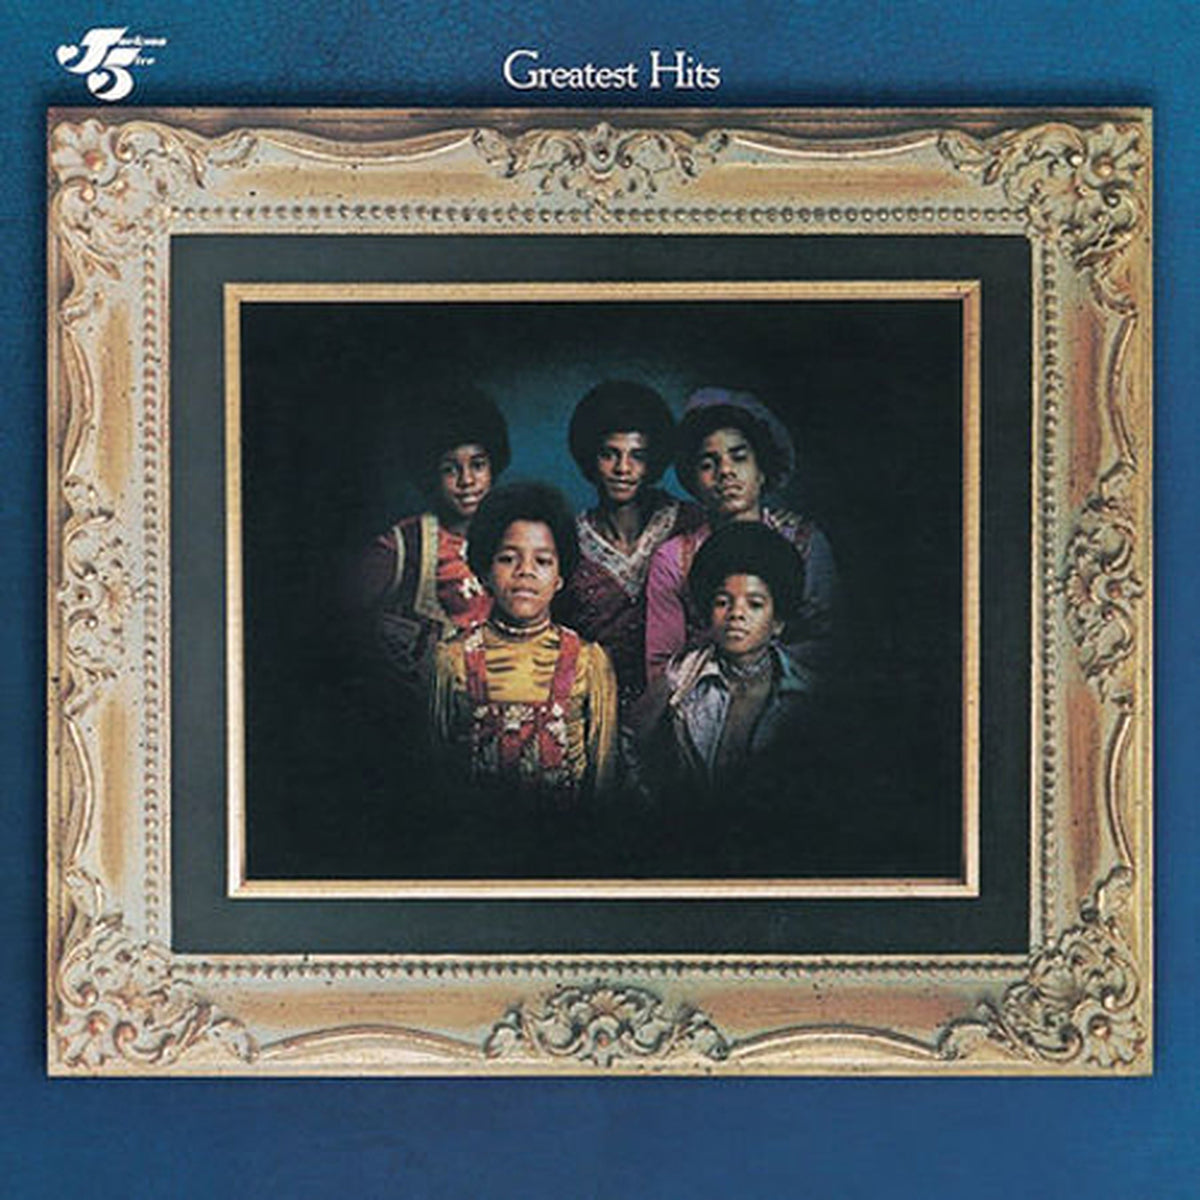 The Jackson 5 - Greatest Hits